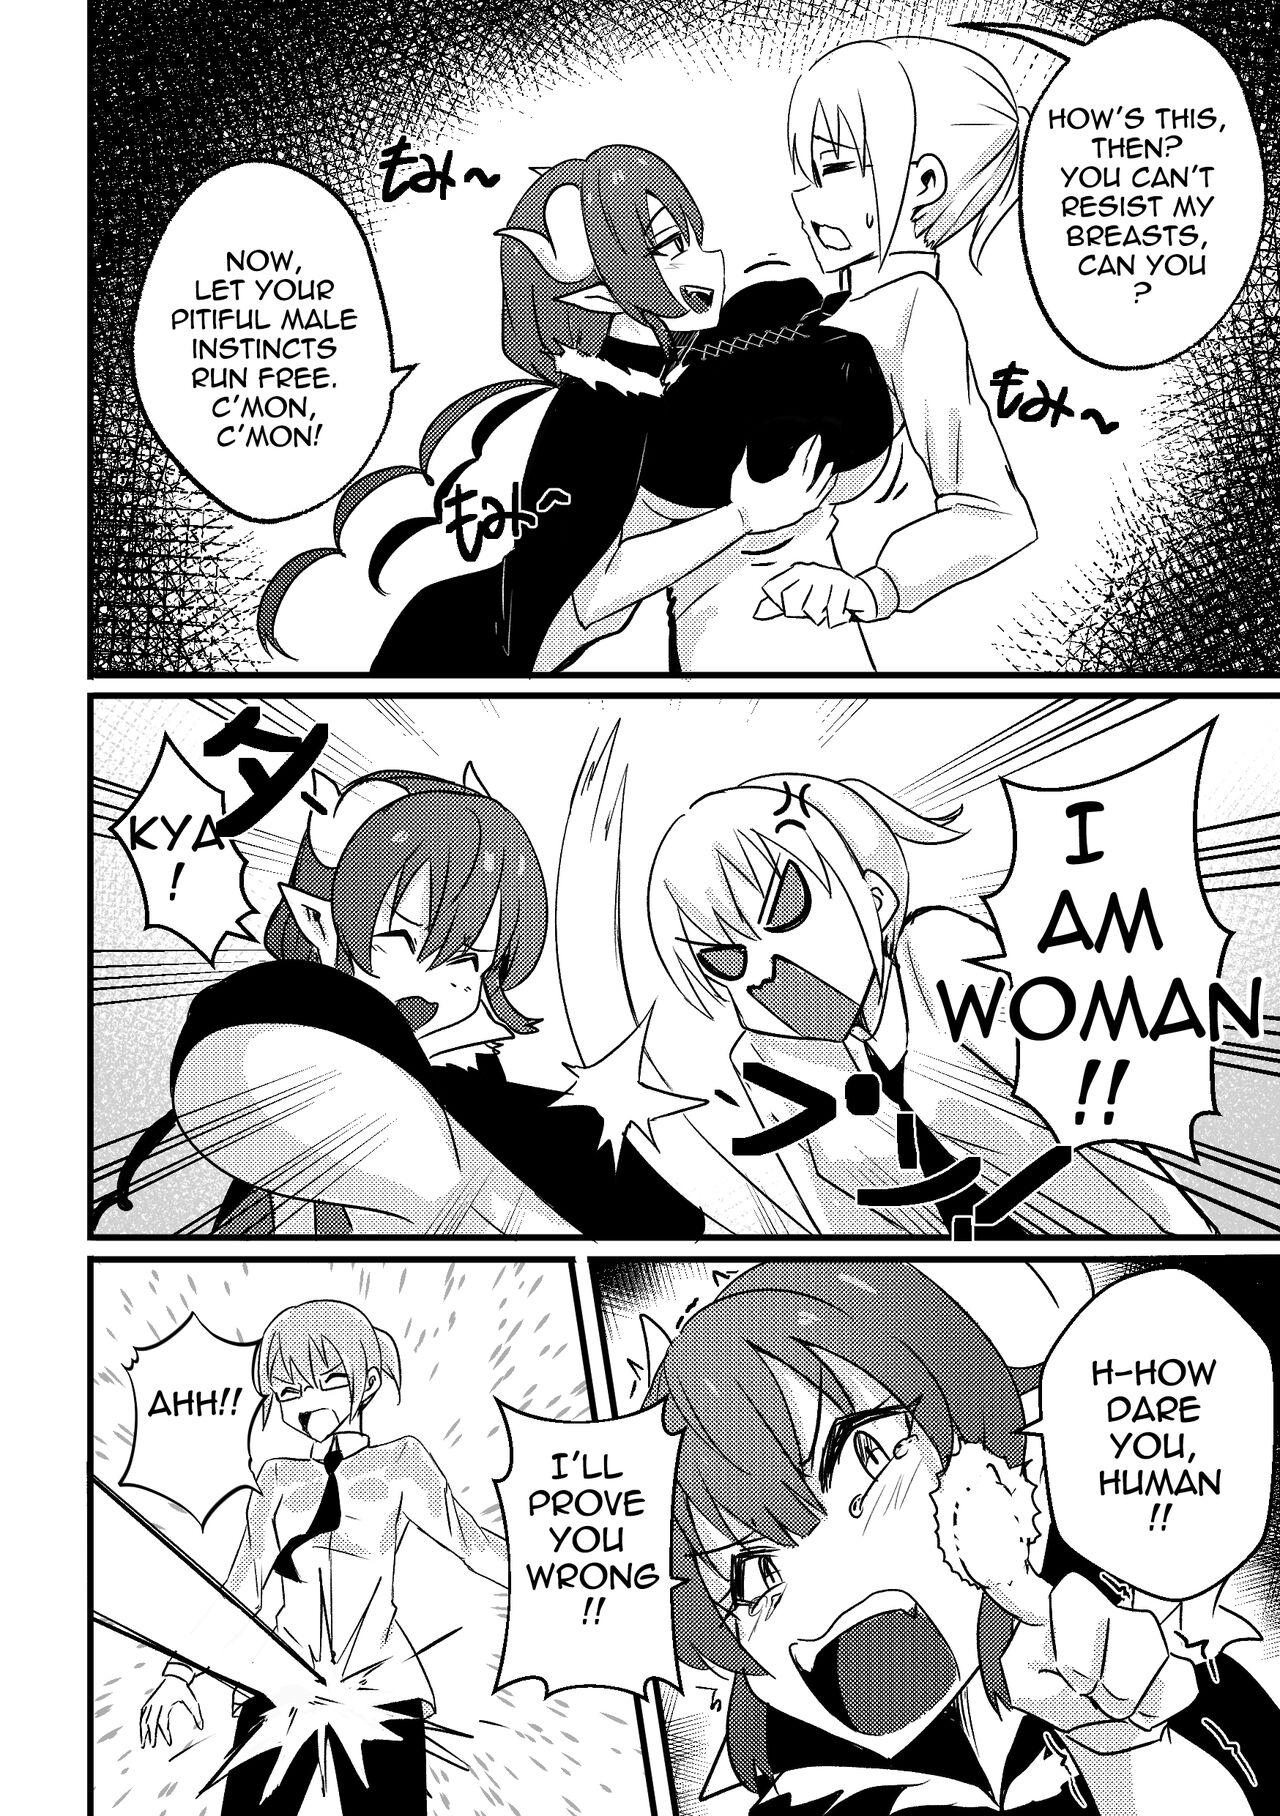 Dirty [Merkonig] ILULU WA MAKETA (Censored) EN - Kobayashi-san-chi no maid dragon European Porn - Page 3